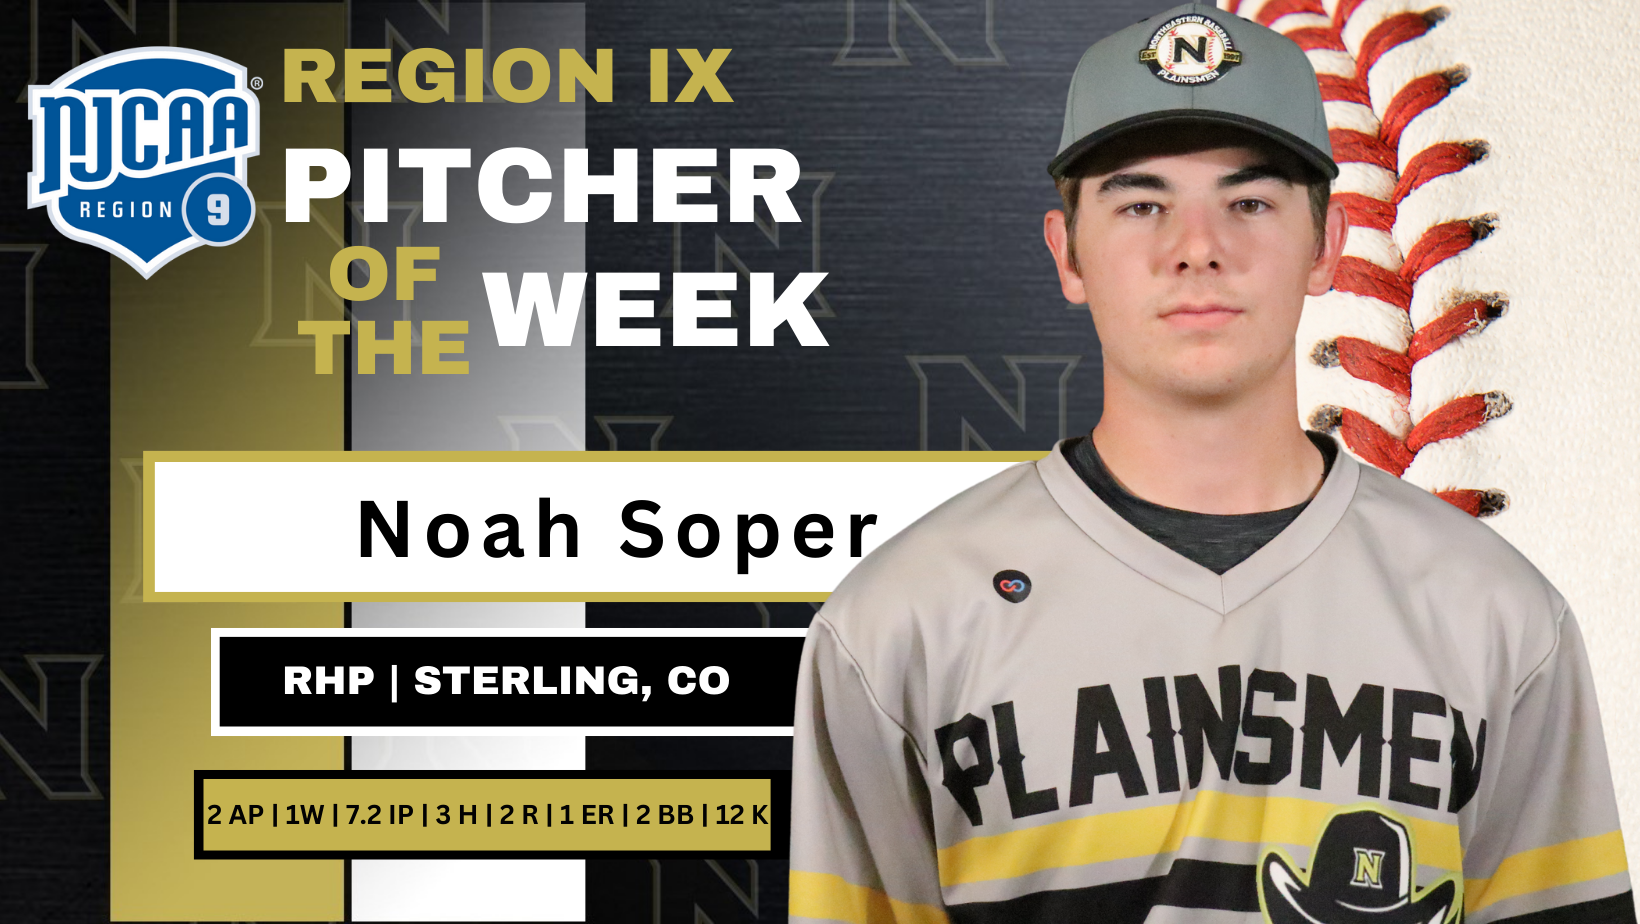 Noah Soper Gets Region IX Pitcher of the Week